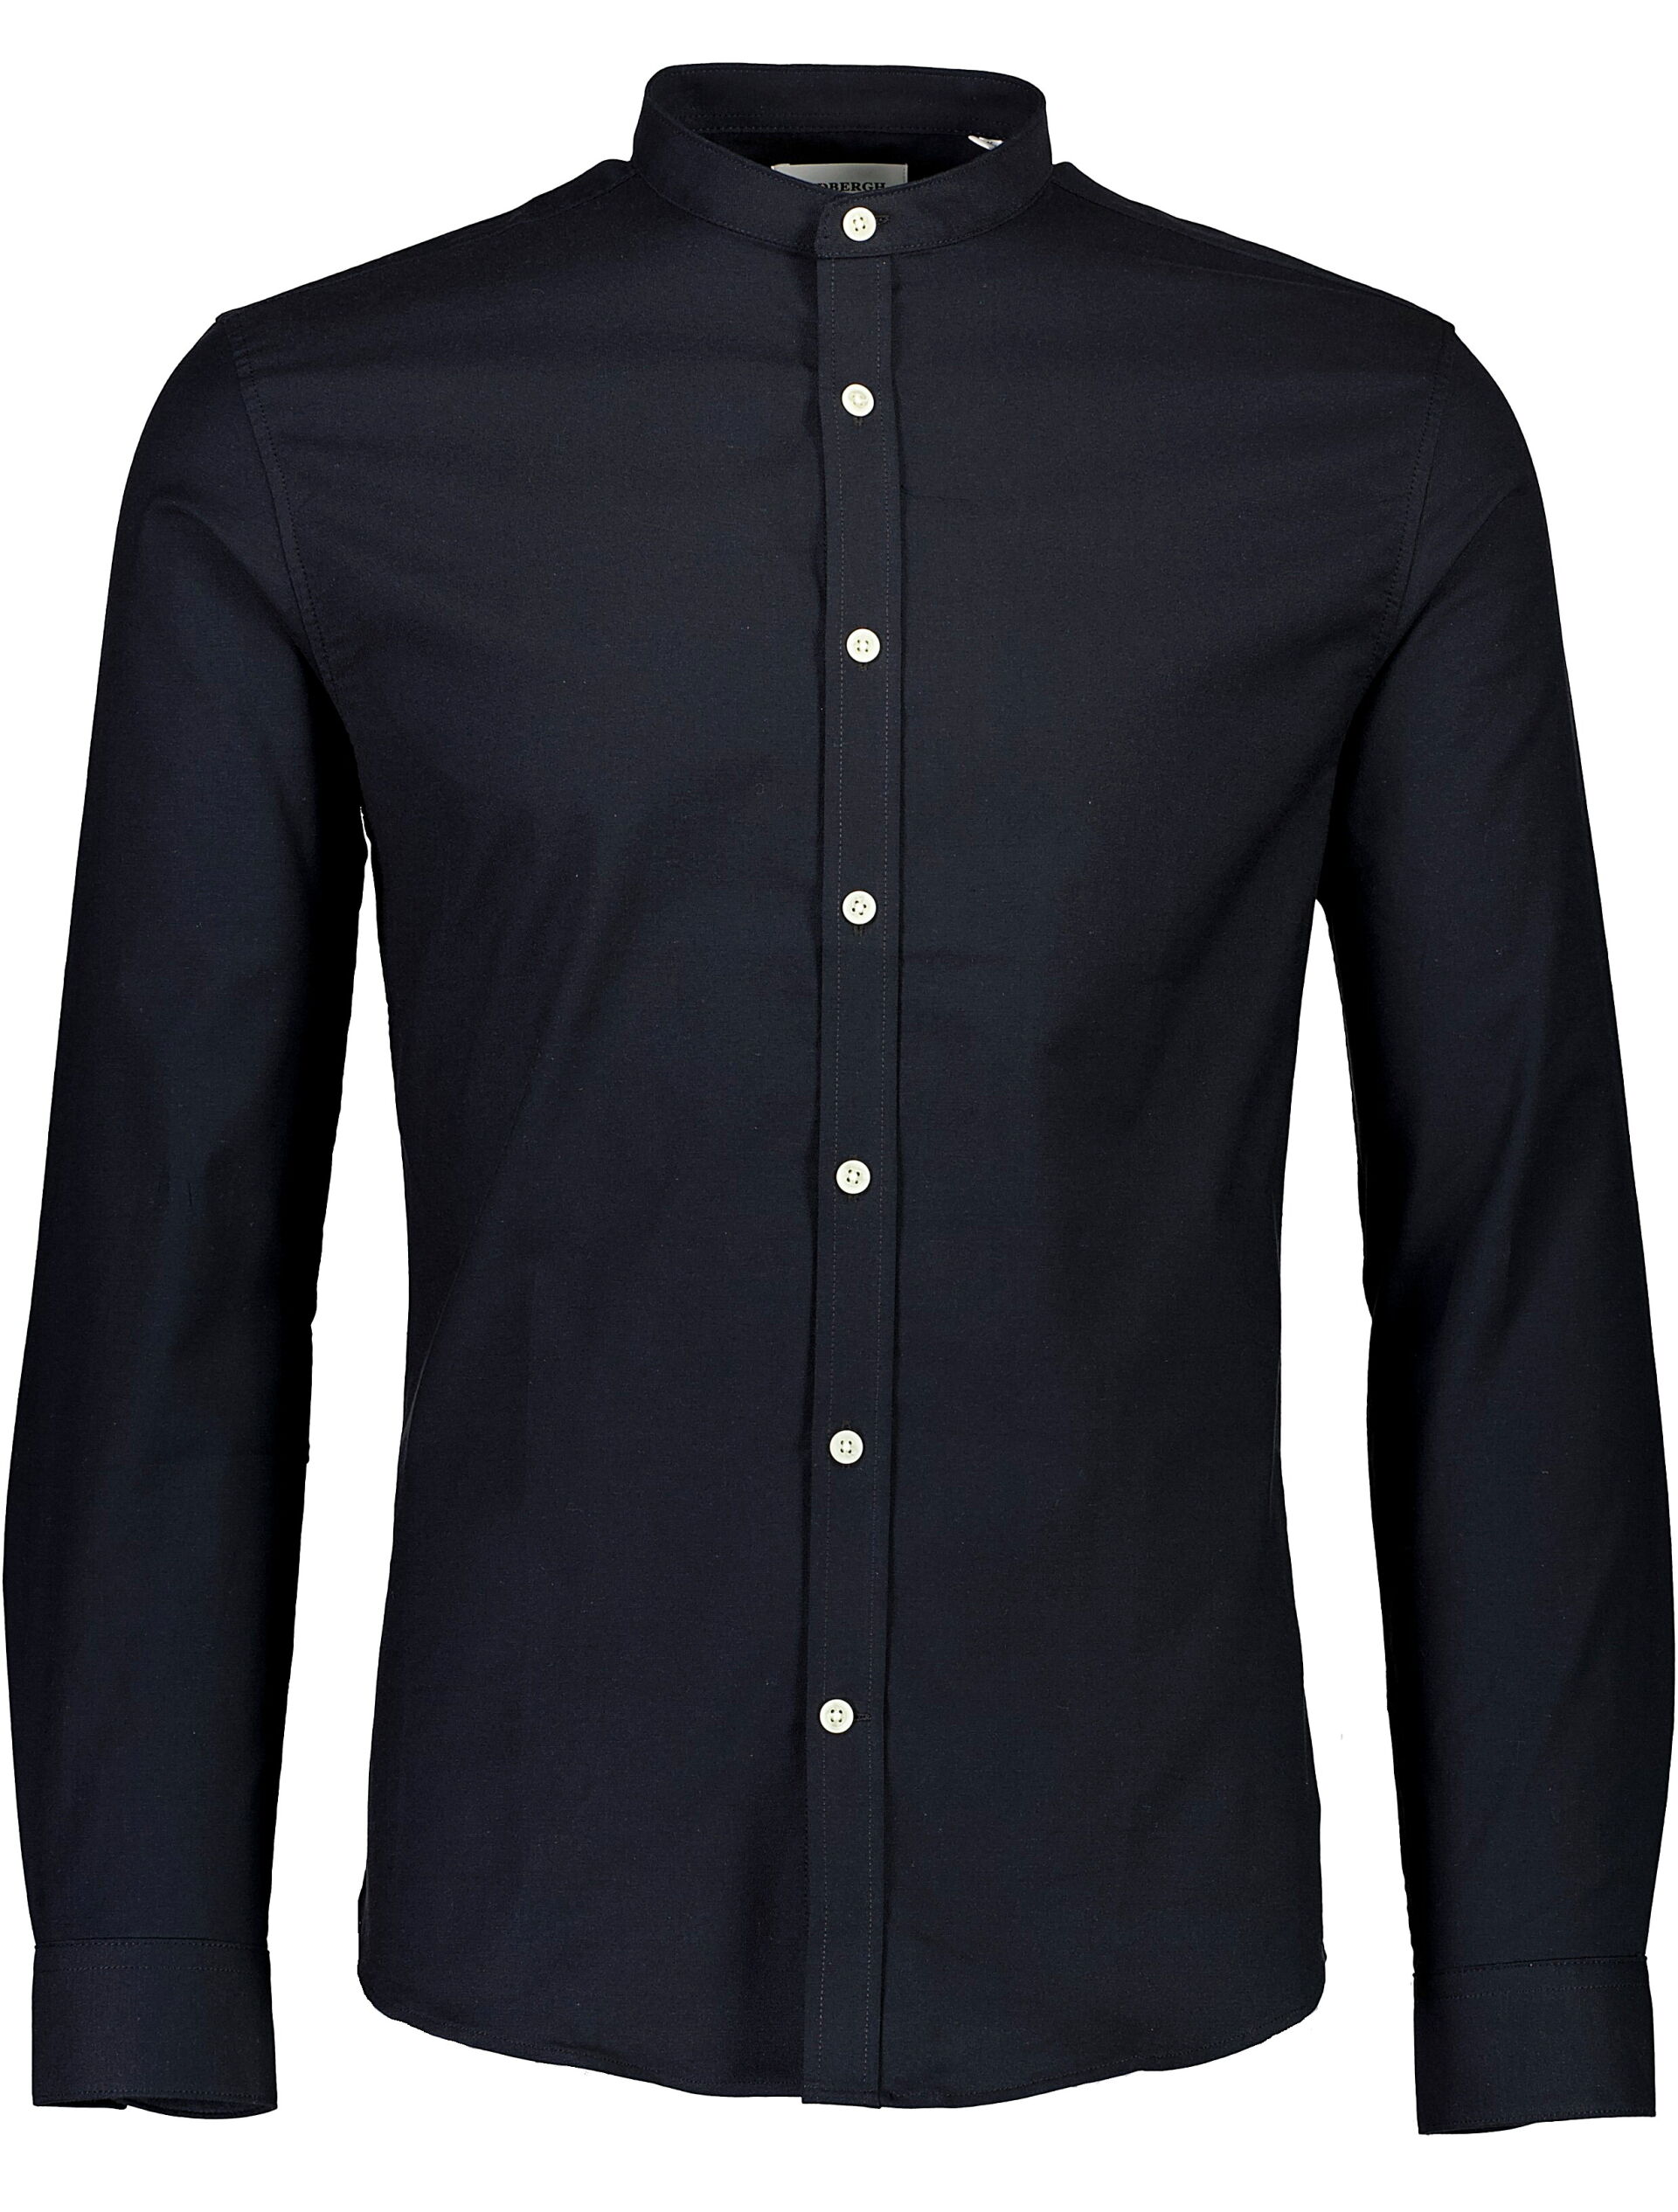 Oxford shirt Oxford shirt Black 30-203174APLUS